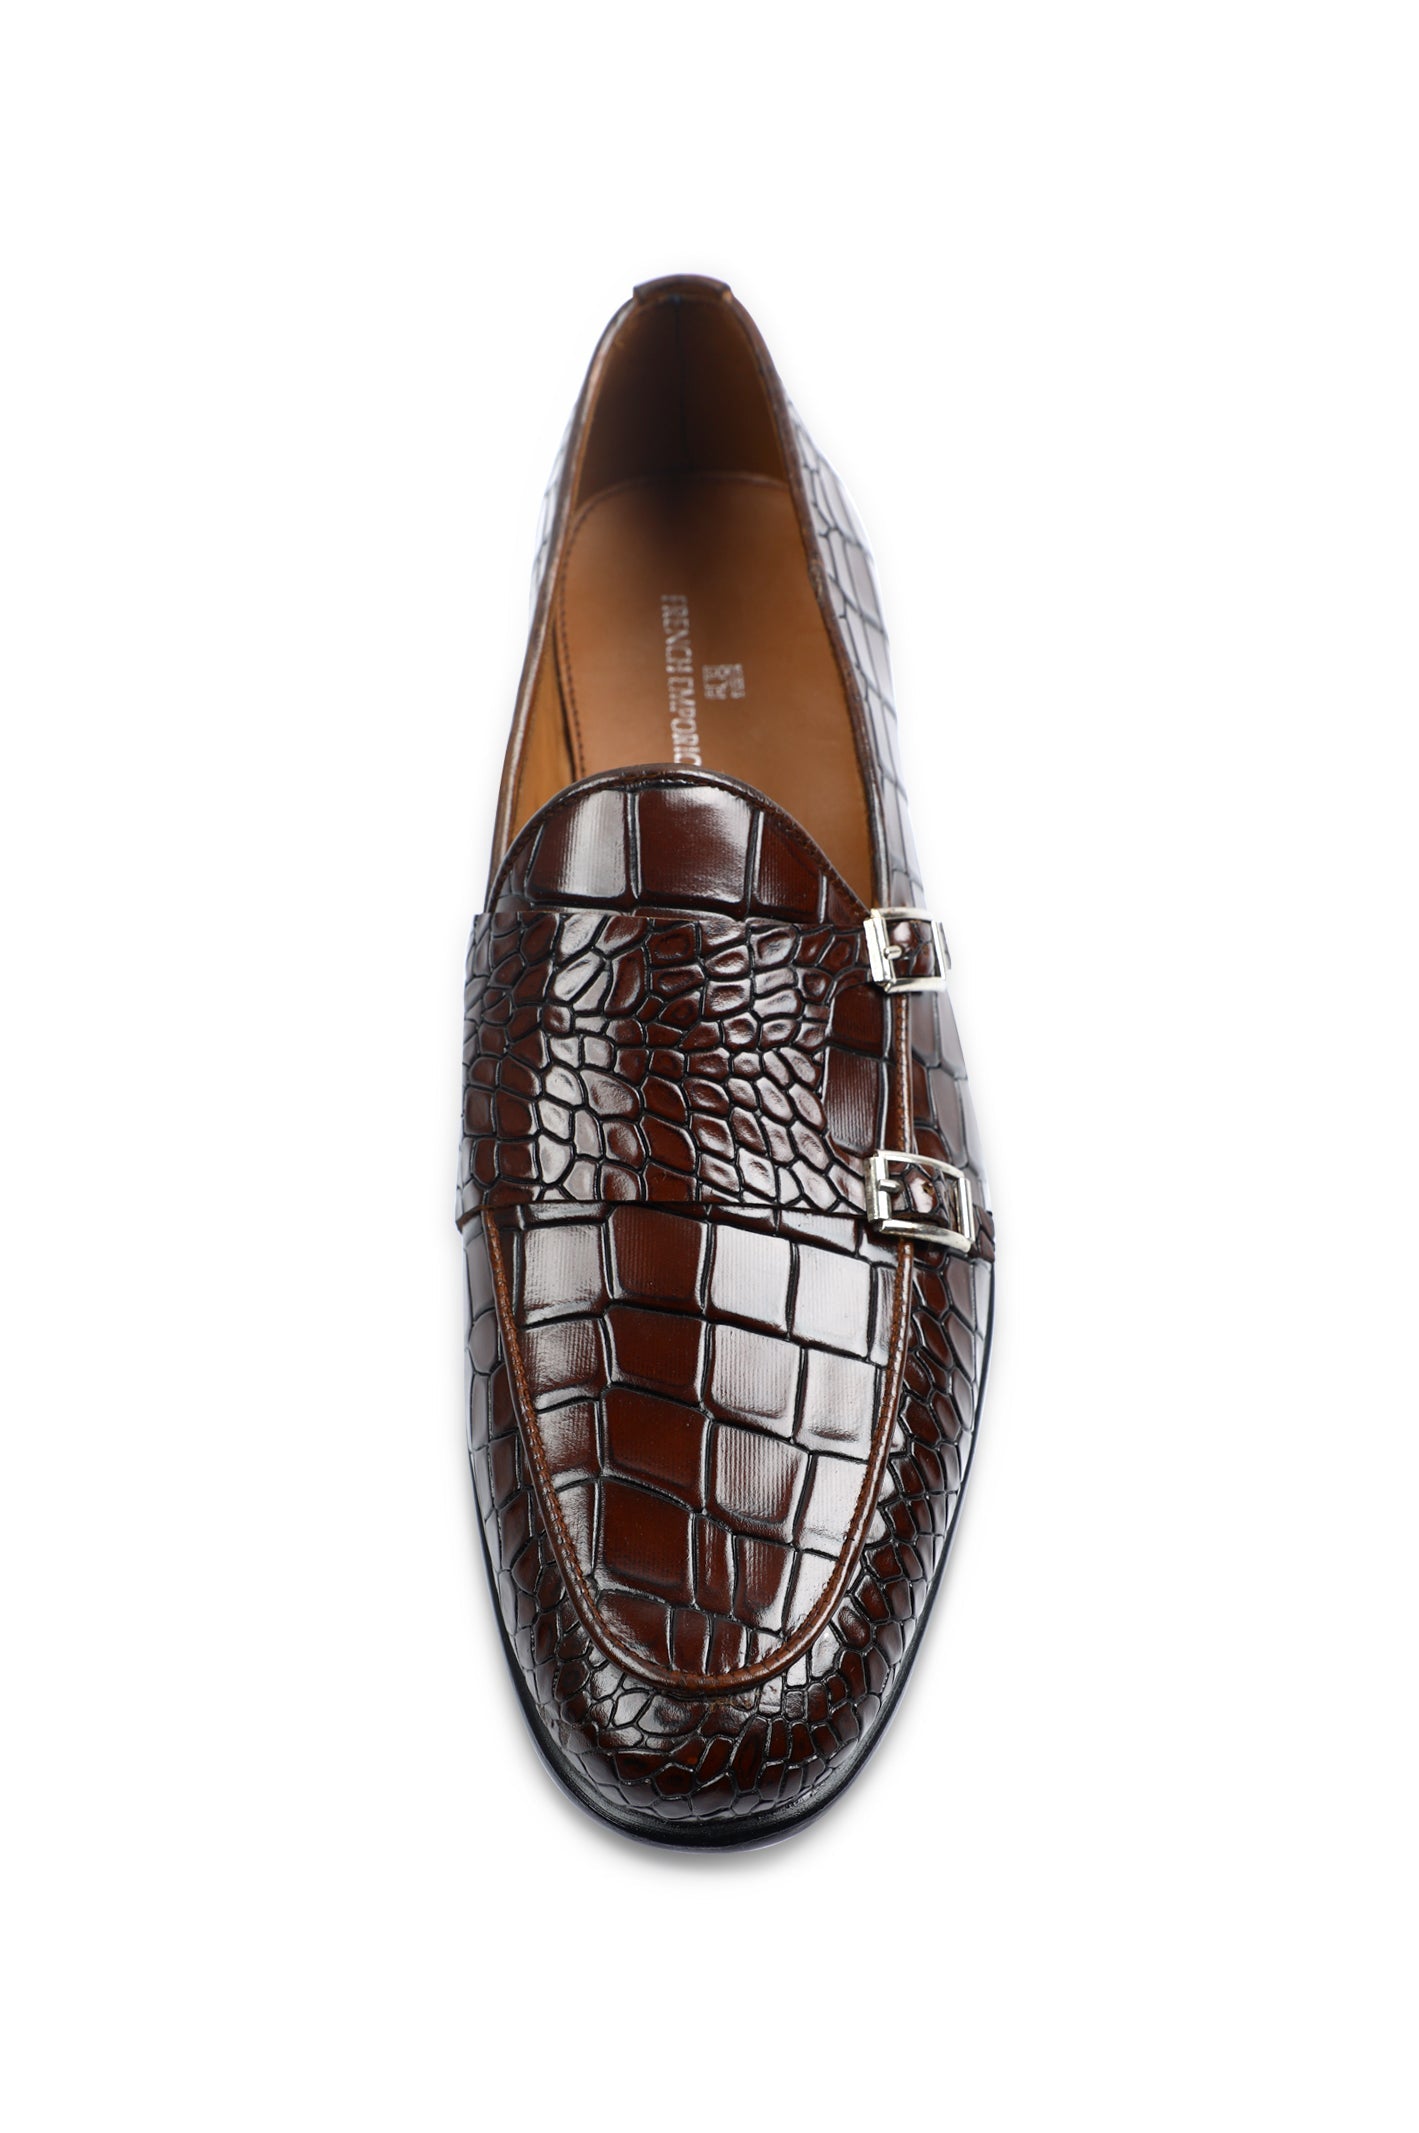 Formal Shoes For Men in Brown SKU: SMF-0157-BROWN - Diners